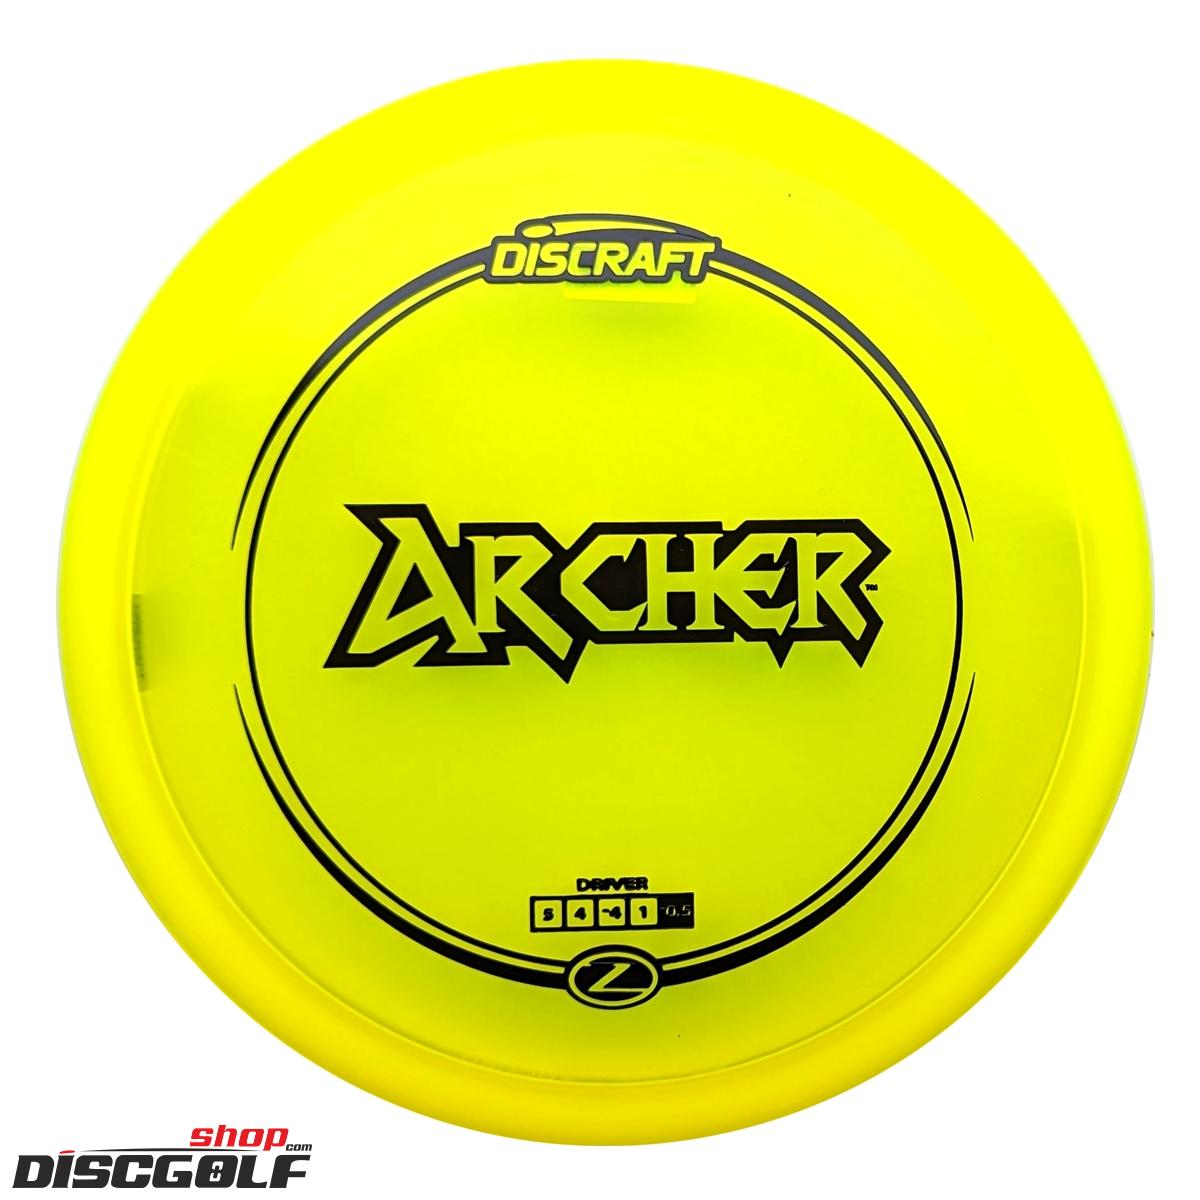 Discraft Archer Z Line (discgolf)